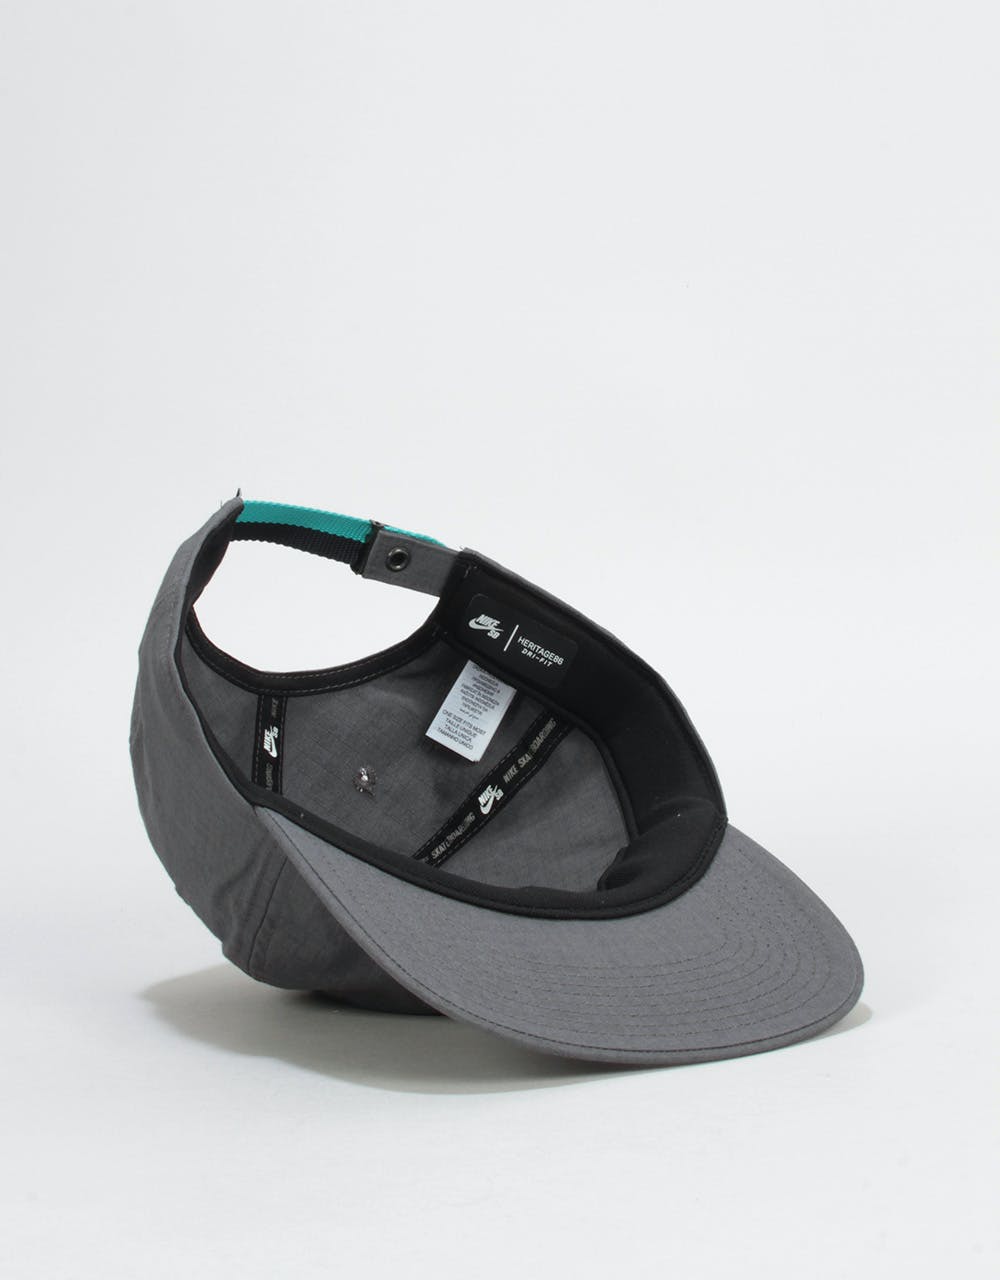 Nike SB H86 Flatbill Cap - Dark Grey/Obsidian/Cabana